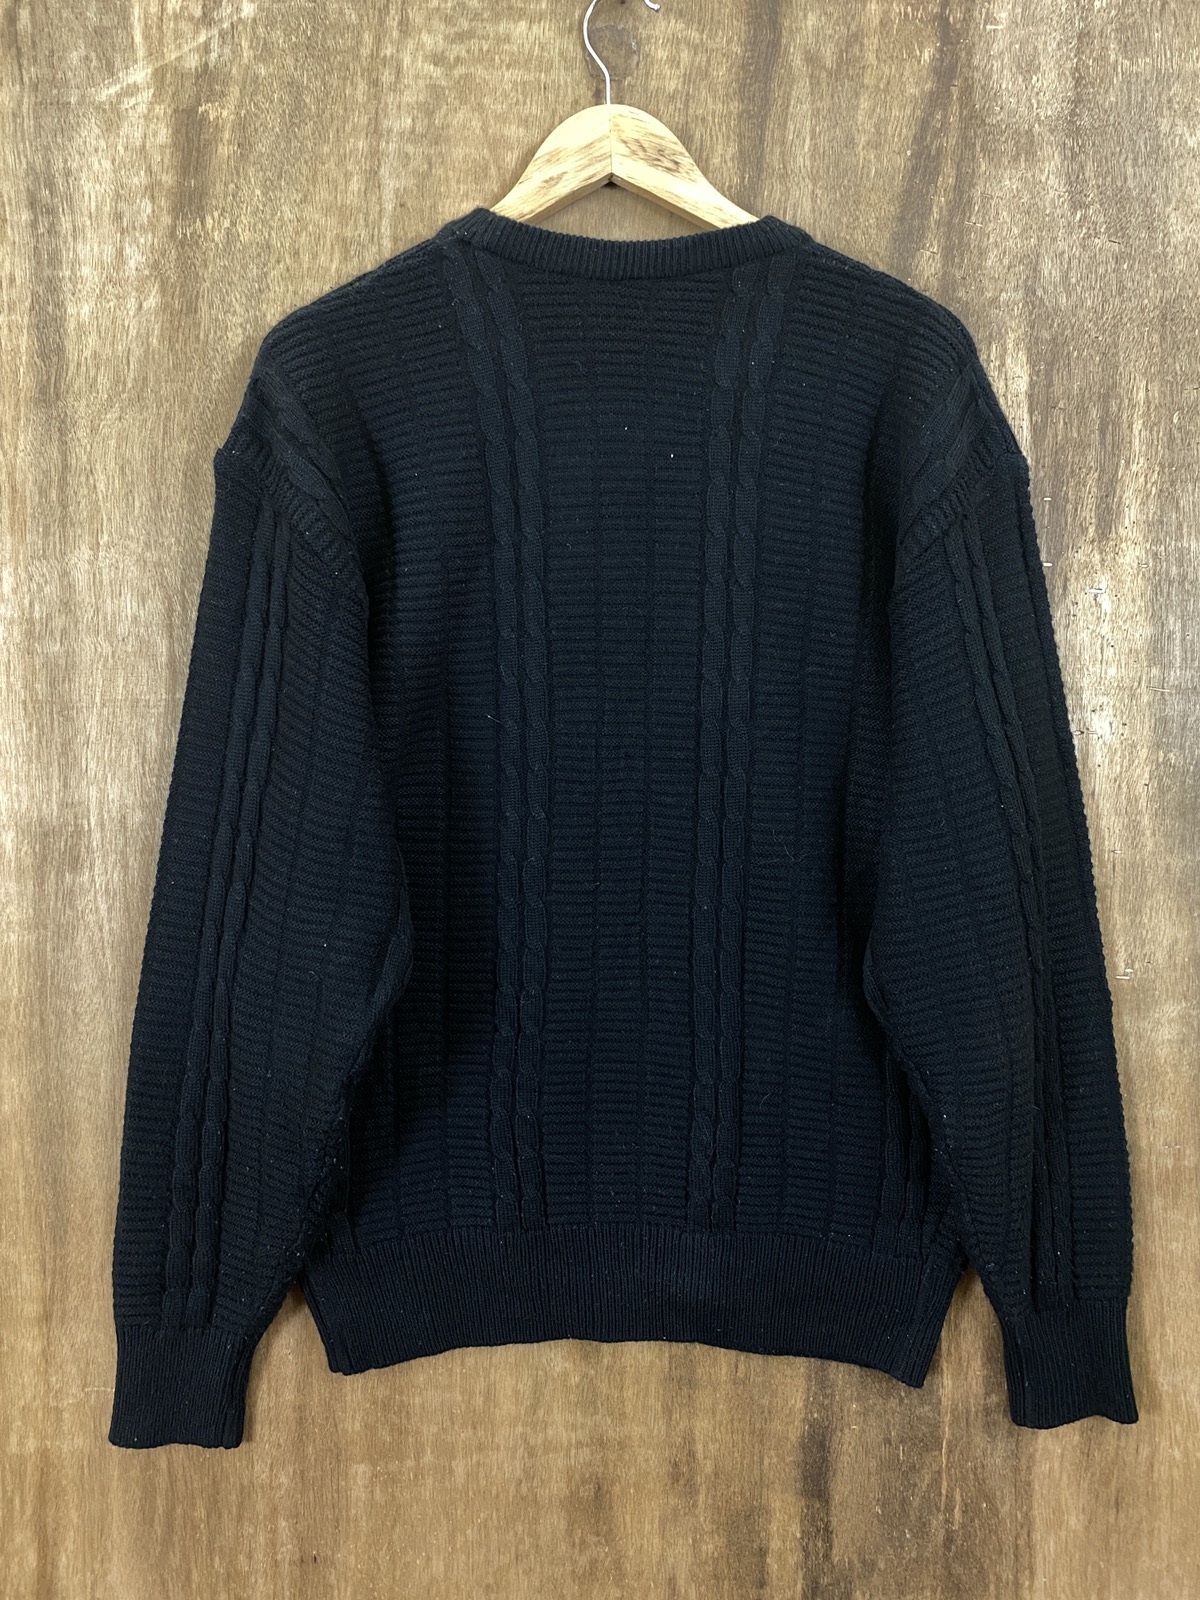 Japanese Brand - Japanese Brand Black Knit Sweaters #1587 - 4